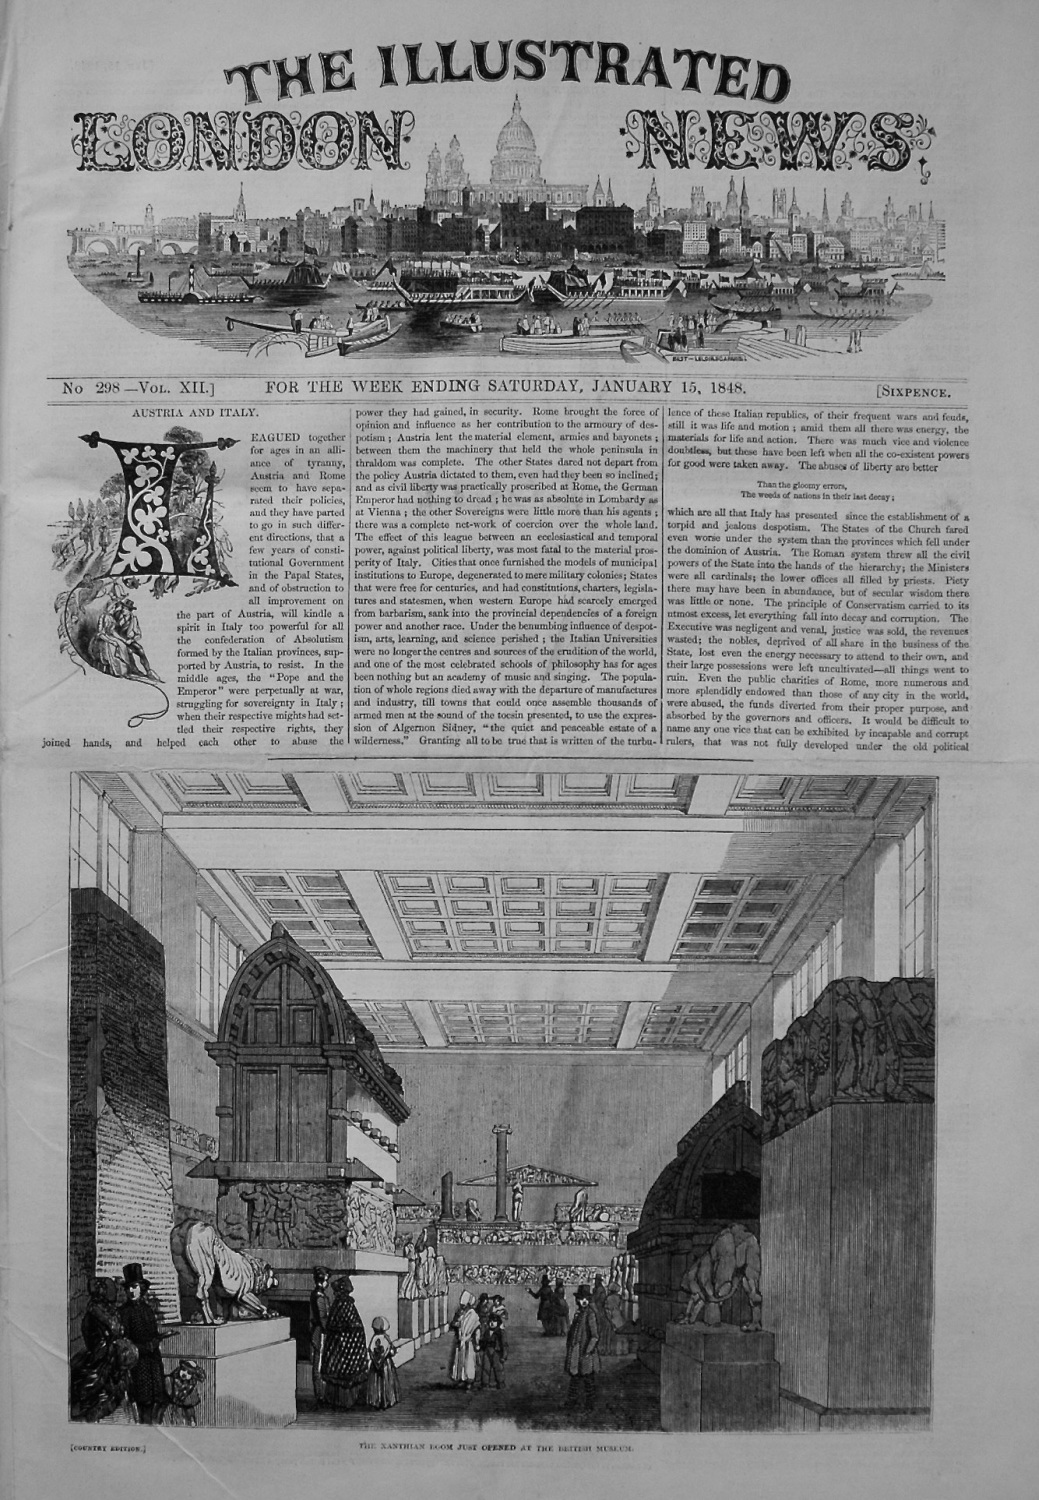 Illustrated London News. January 15th, 1848.